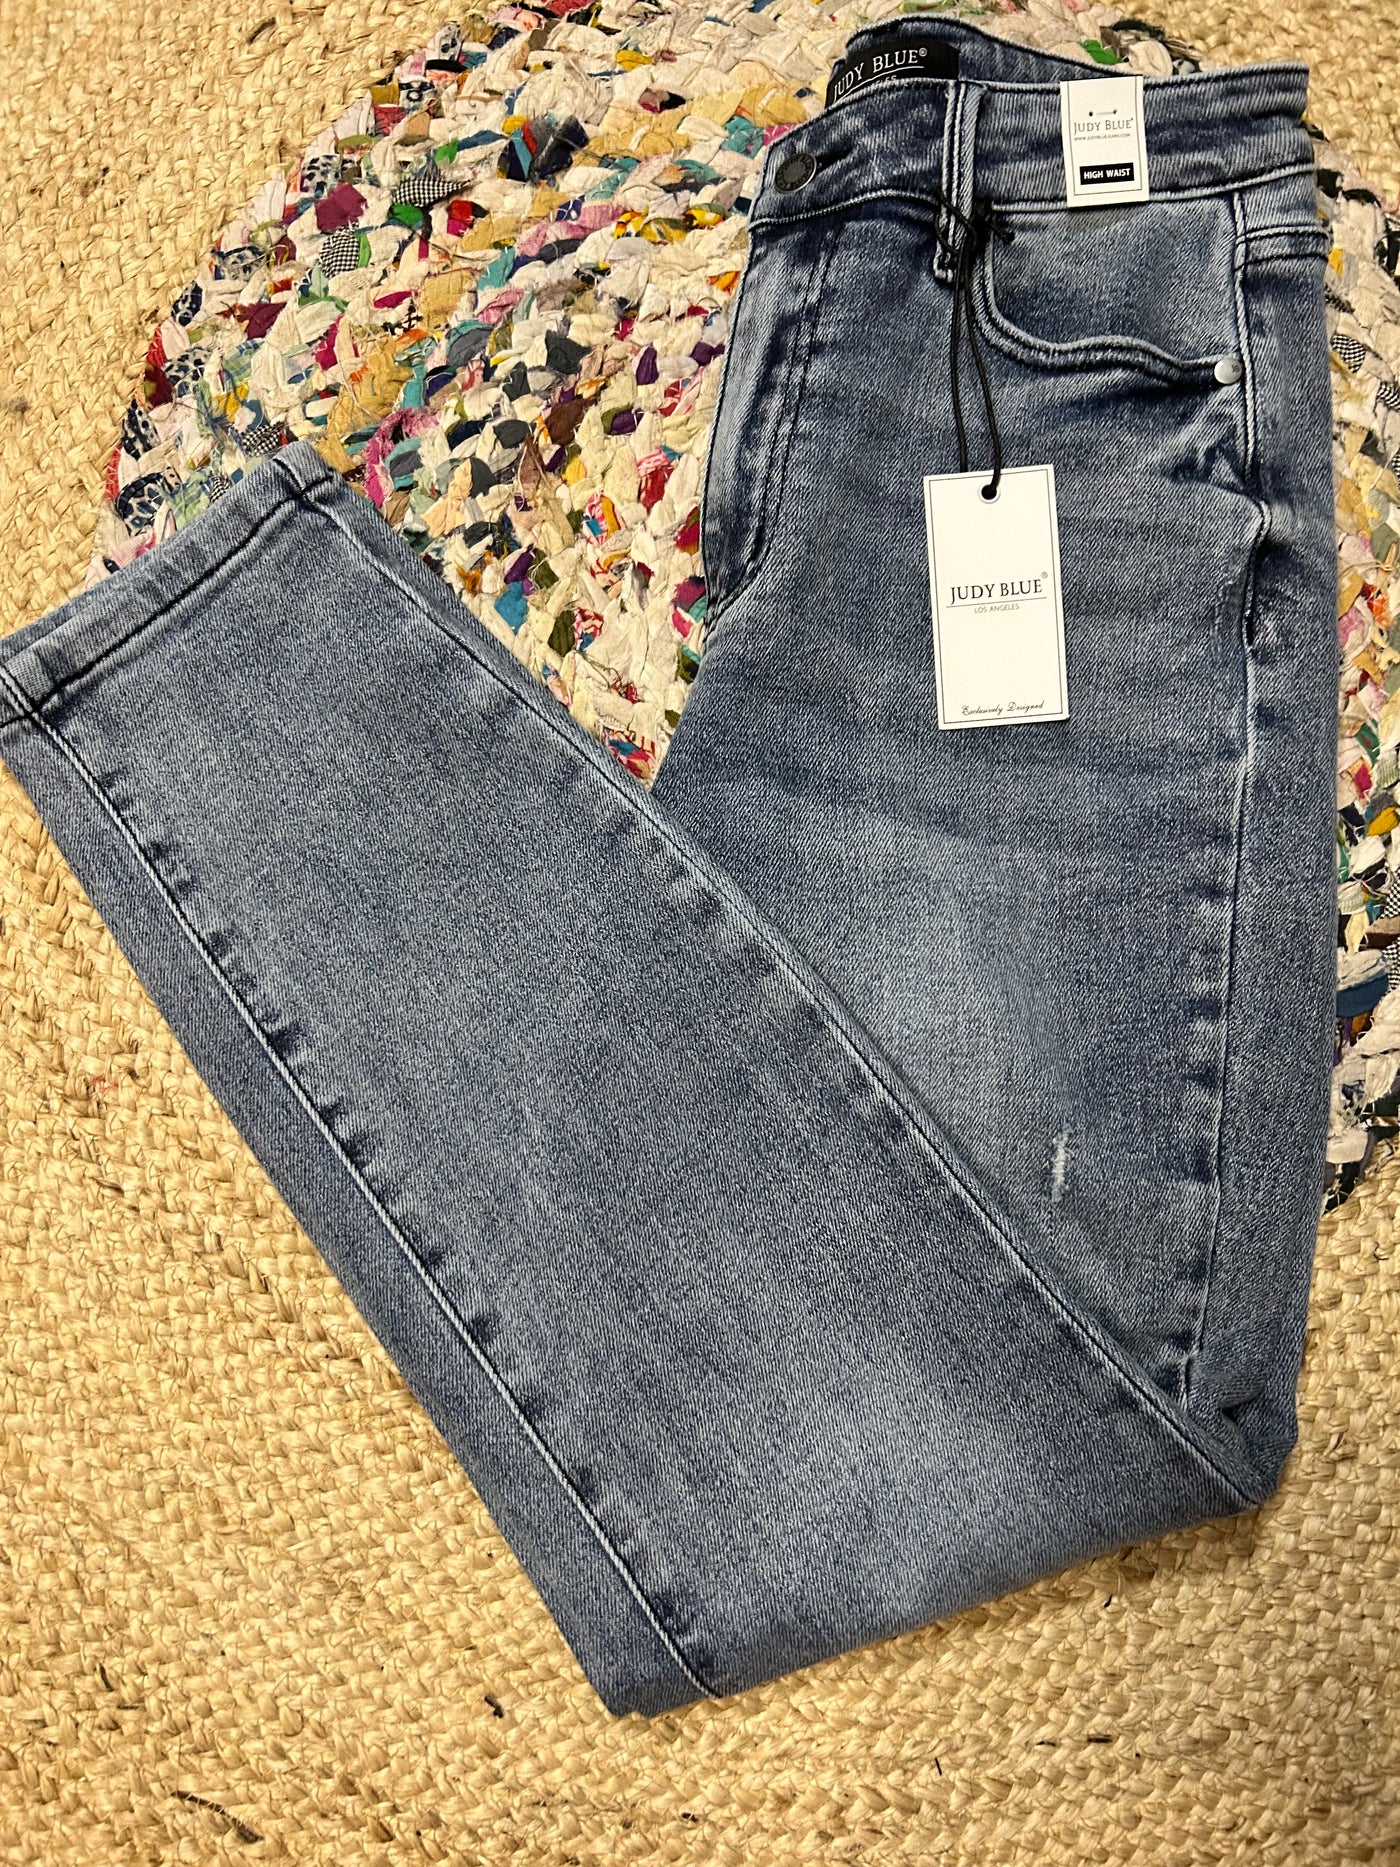 Judy Blue Floyd Vintage Jeans